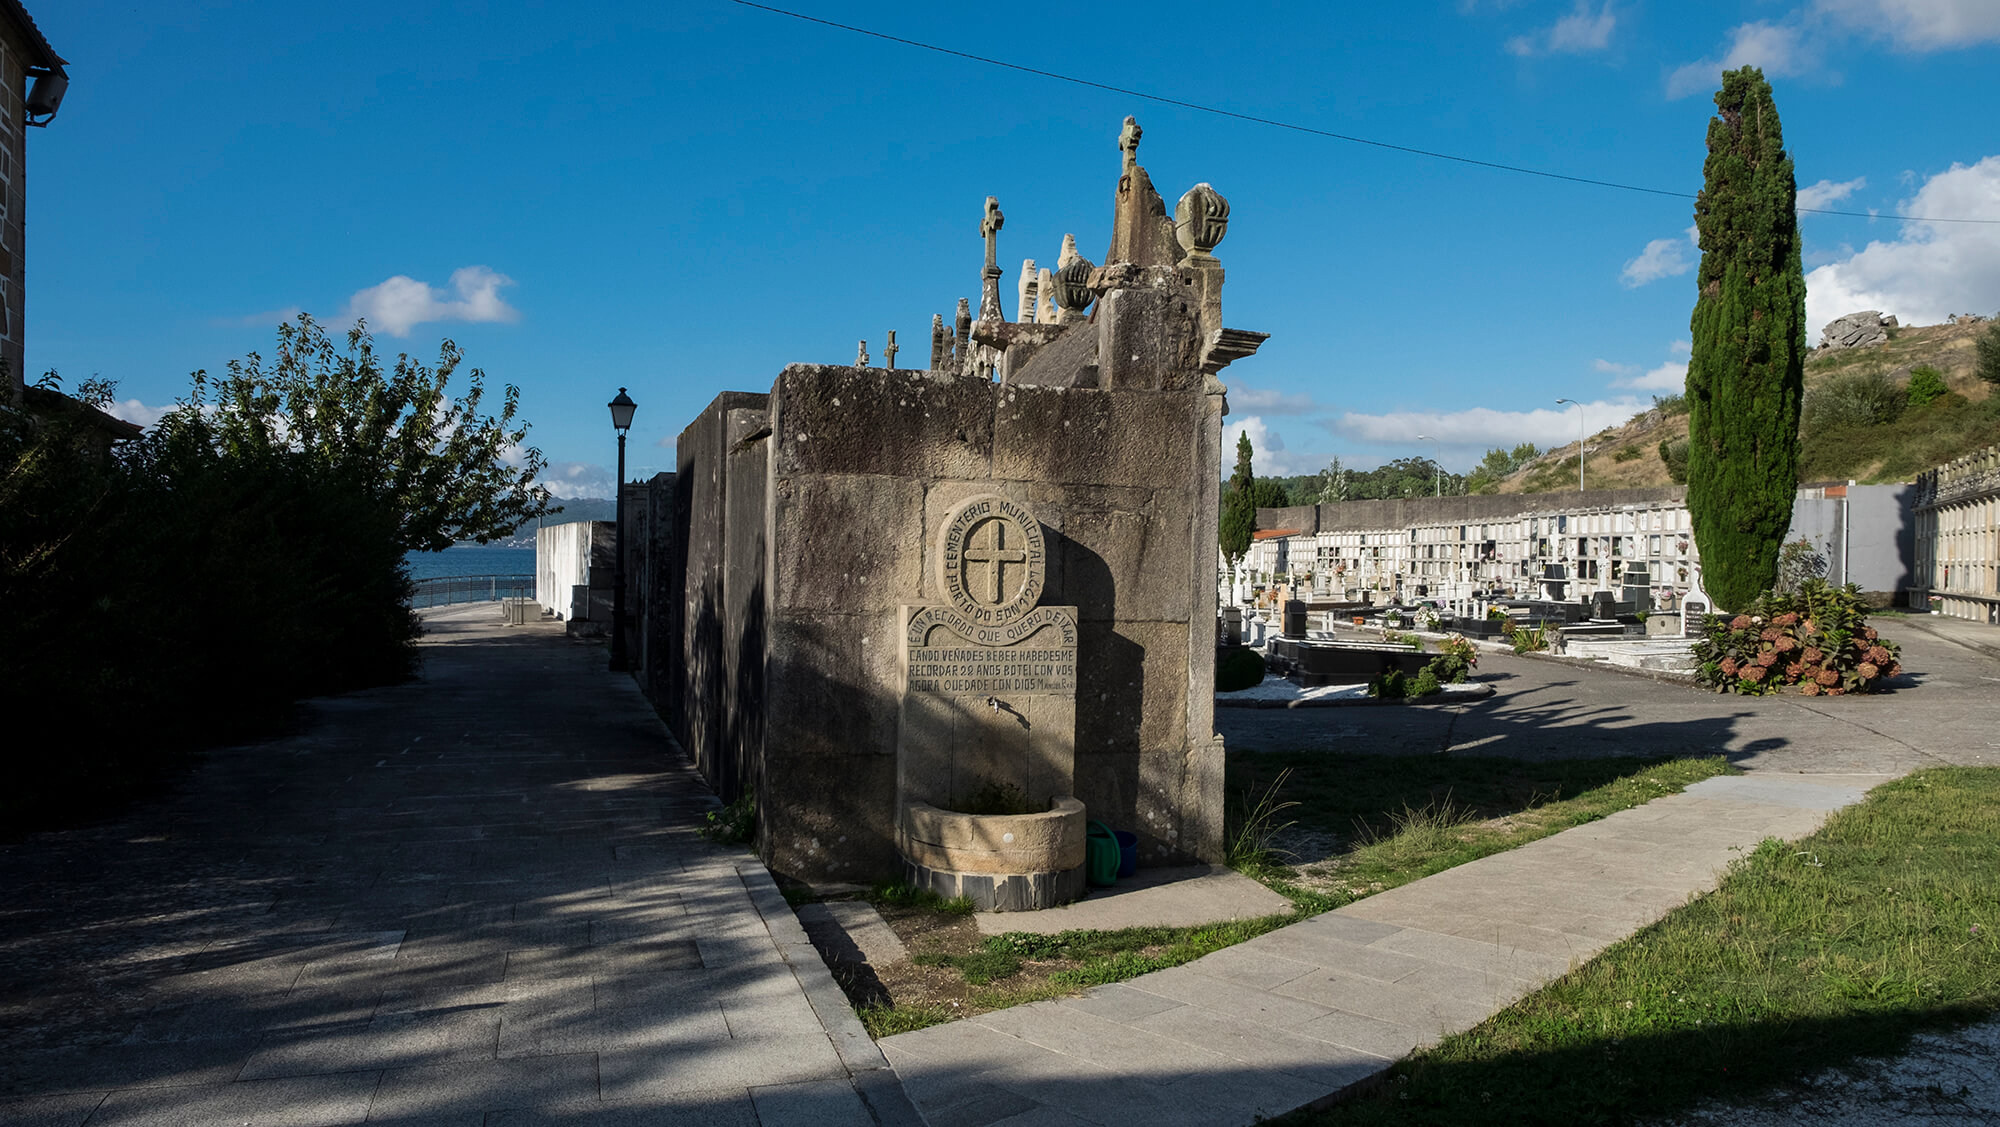 Ría de Muros y Noia. Porto do Son. Cementerio